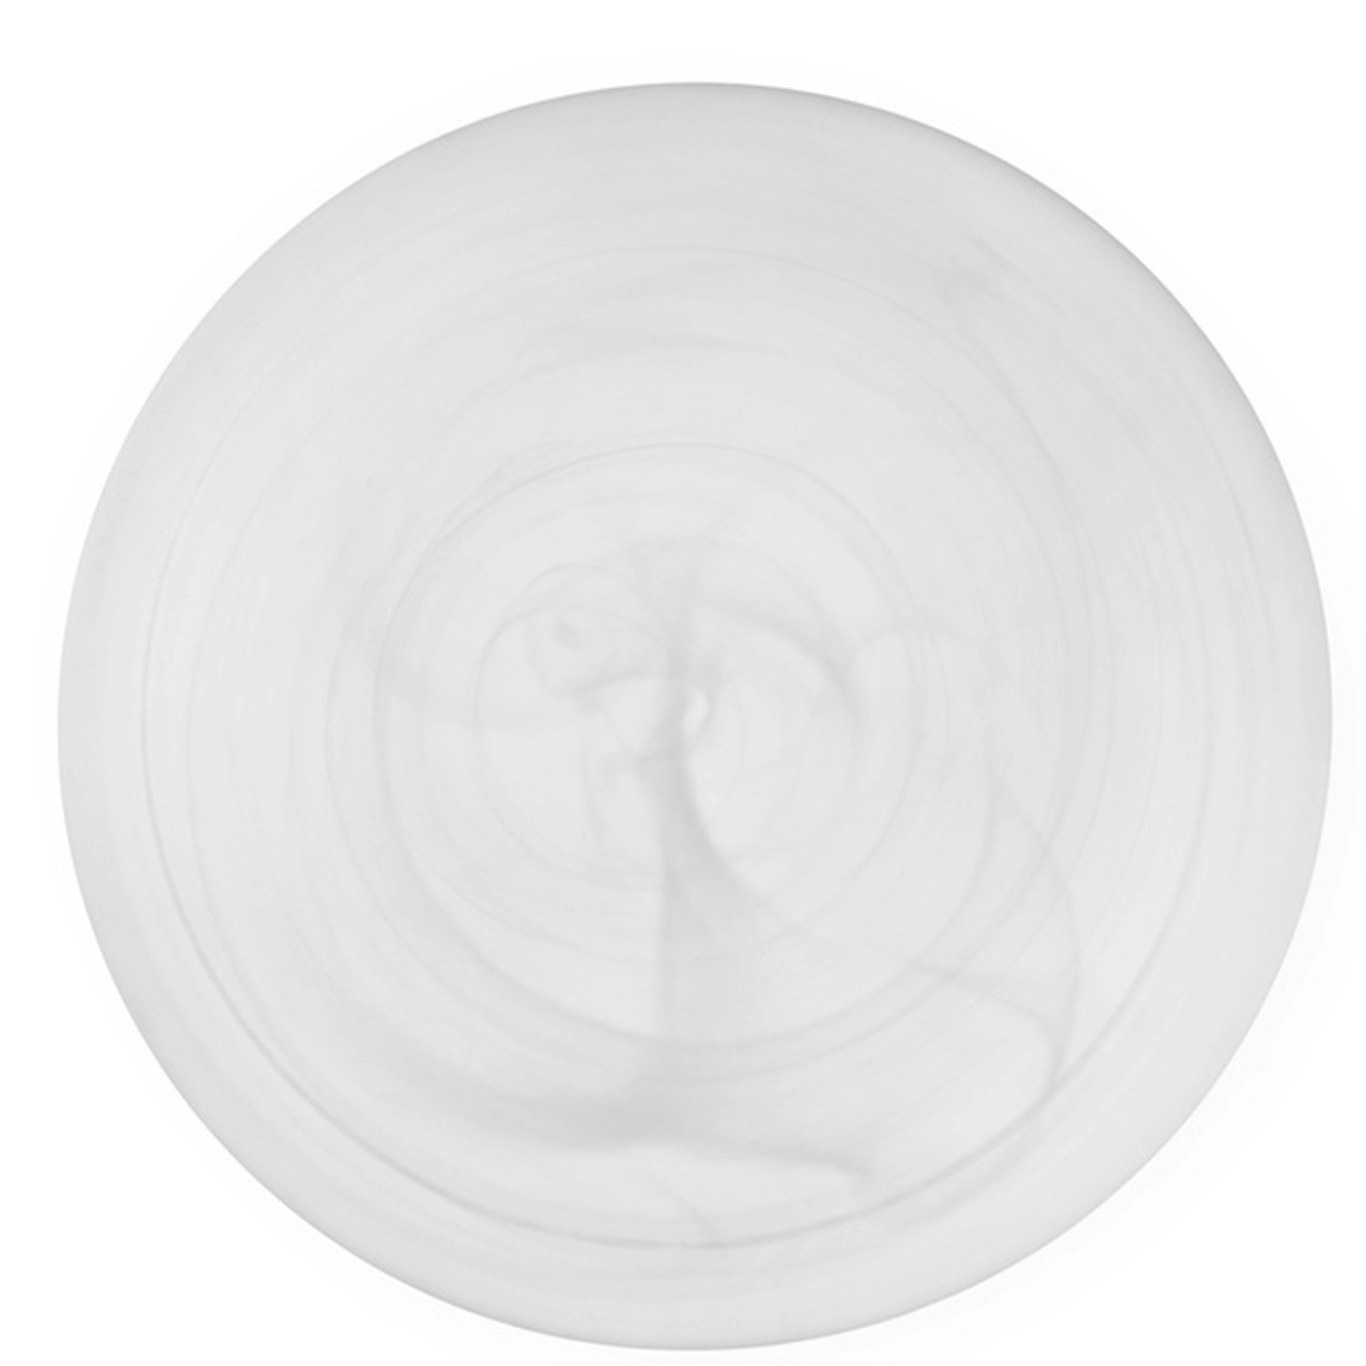 Cosmic Plate Ø16 cm, White